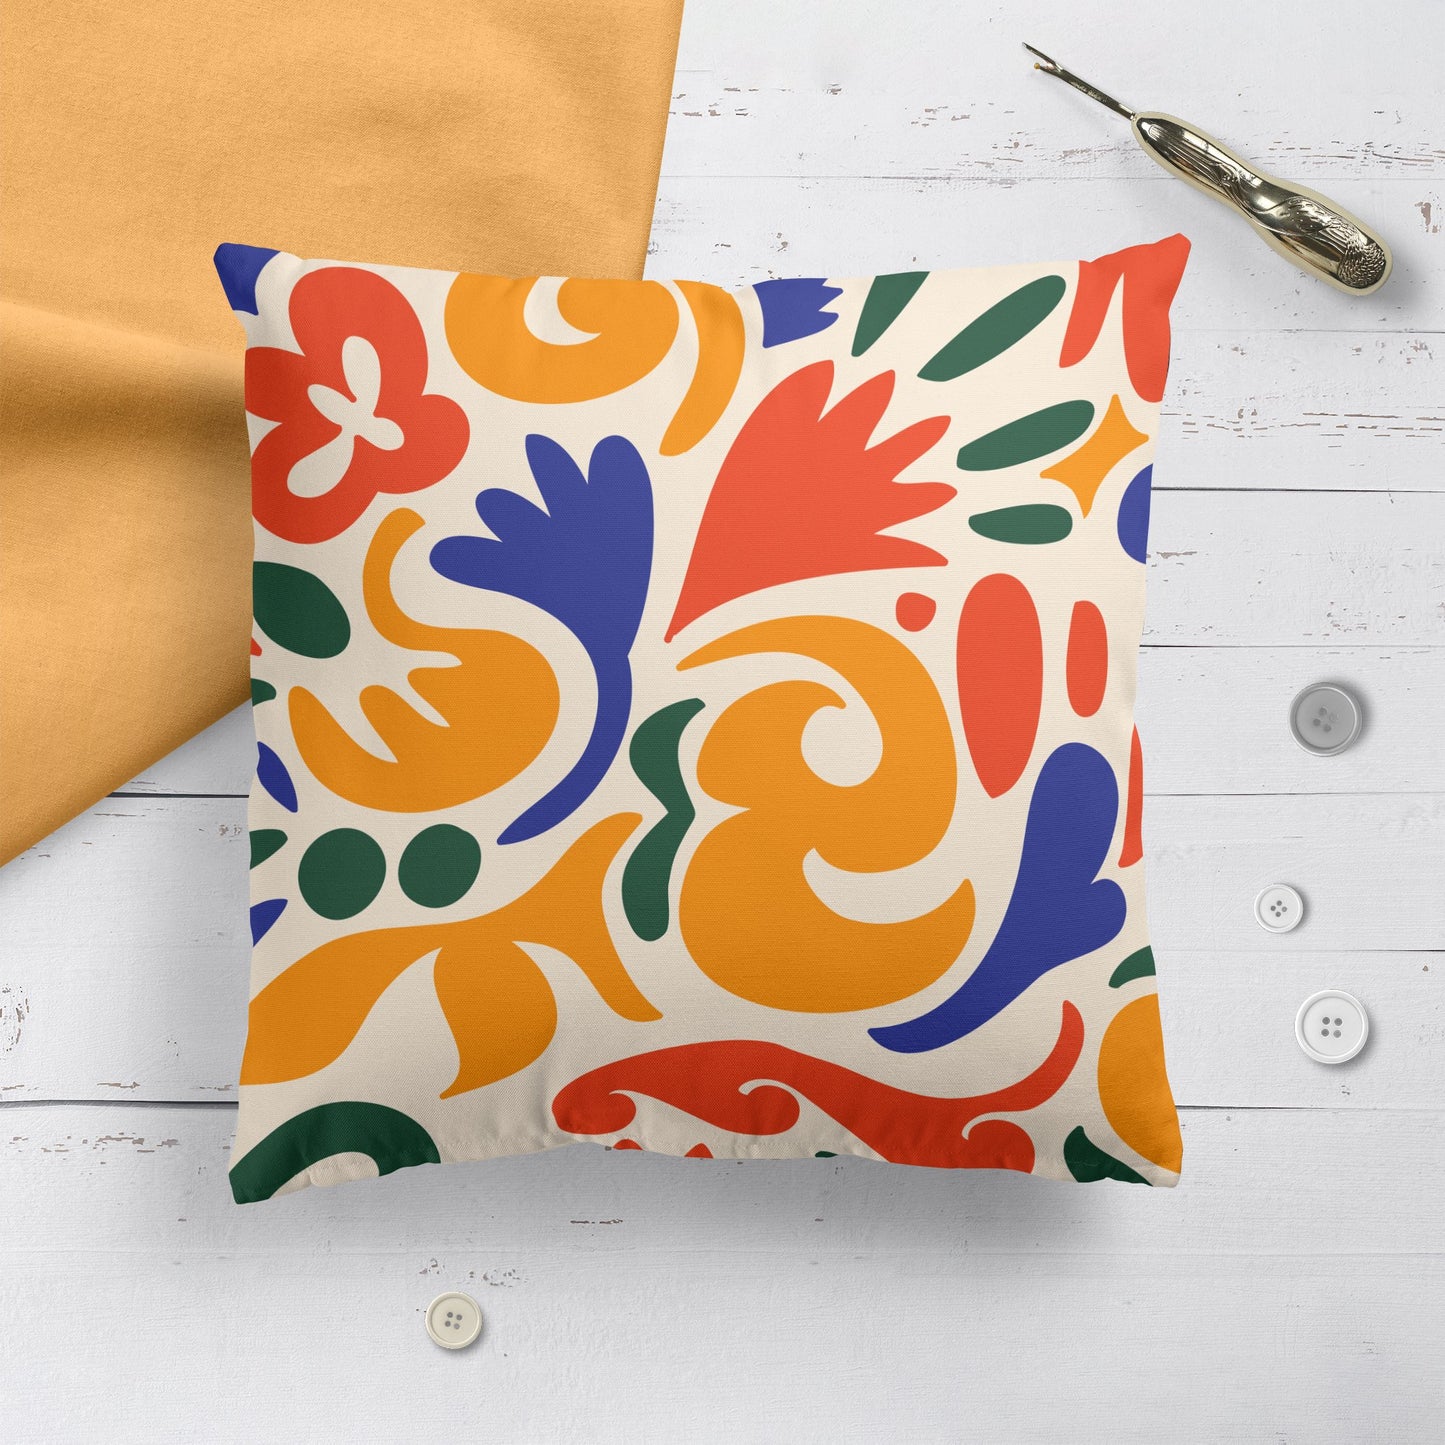 Unique Colorful Throw Pillow